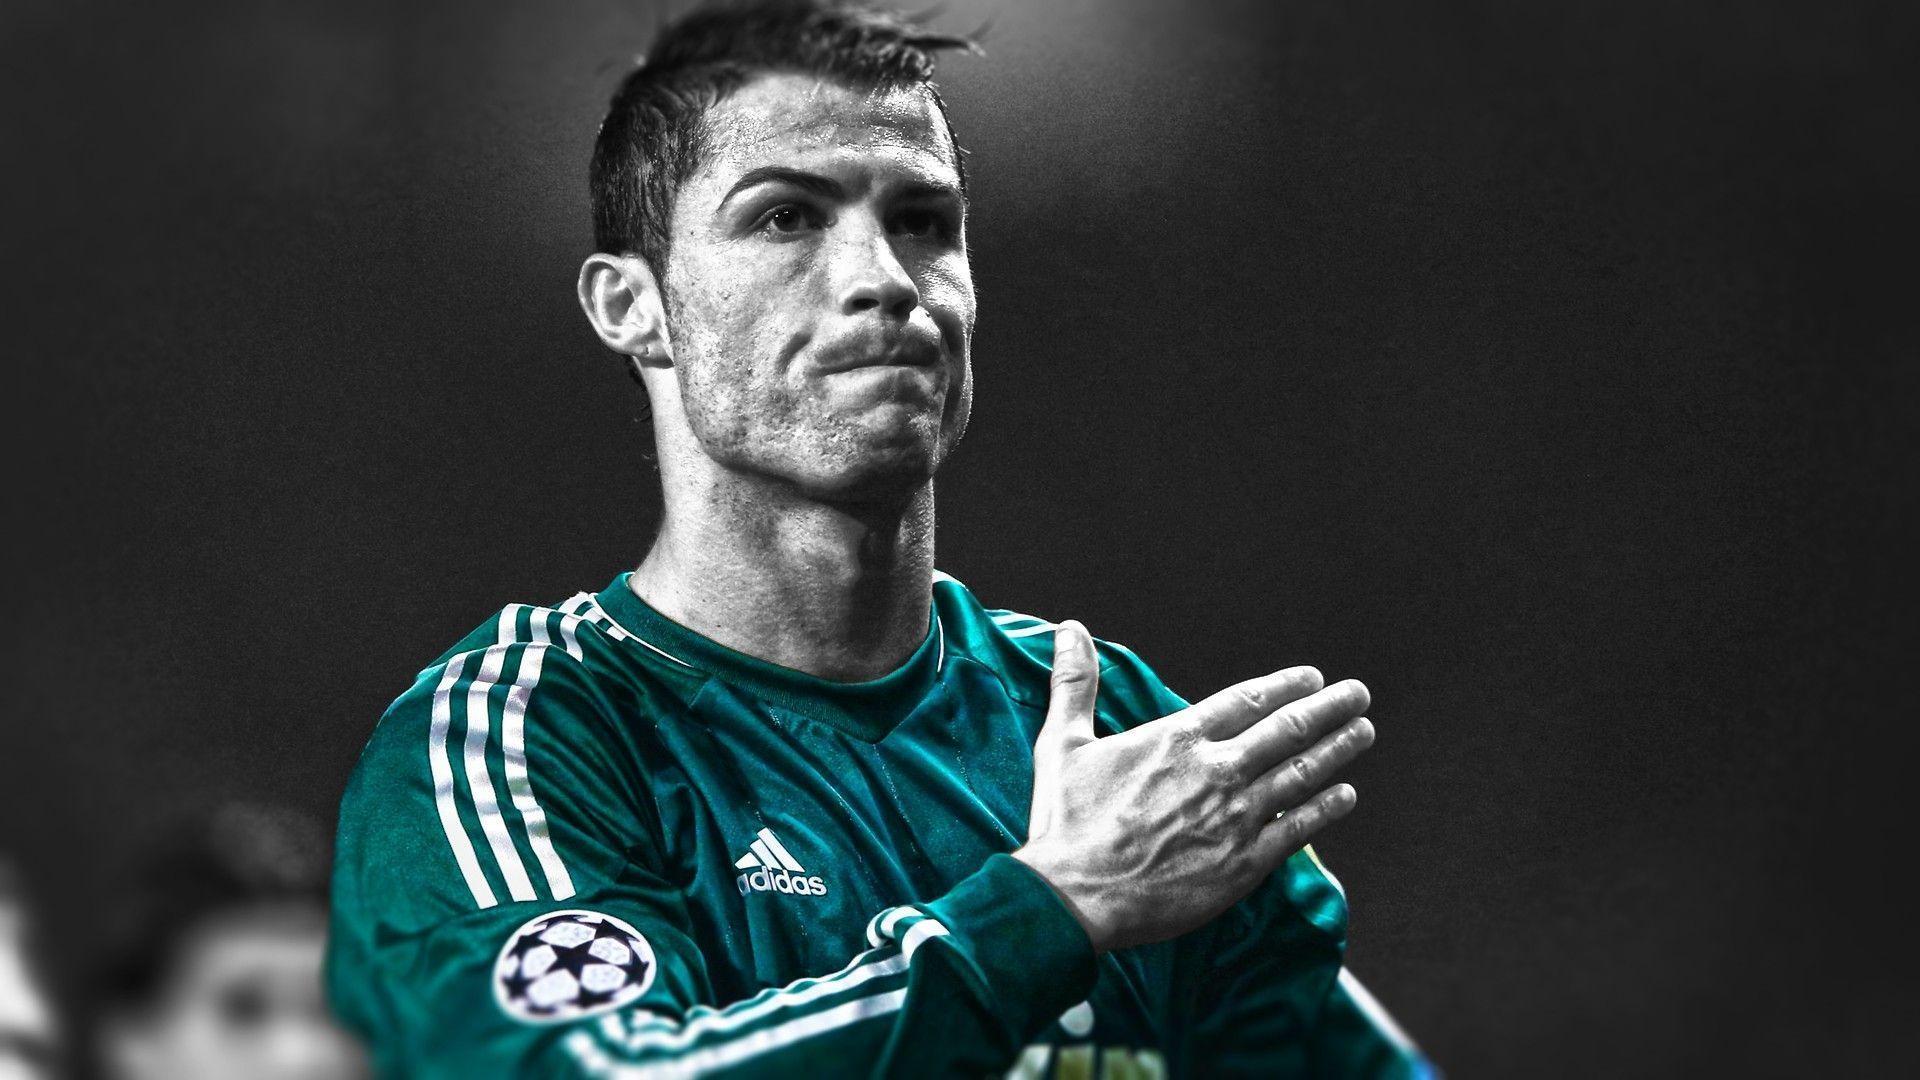 Cristiano Ronaldo 2014 Background. HD Wallpaper and Download Free